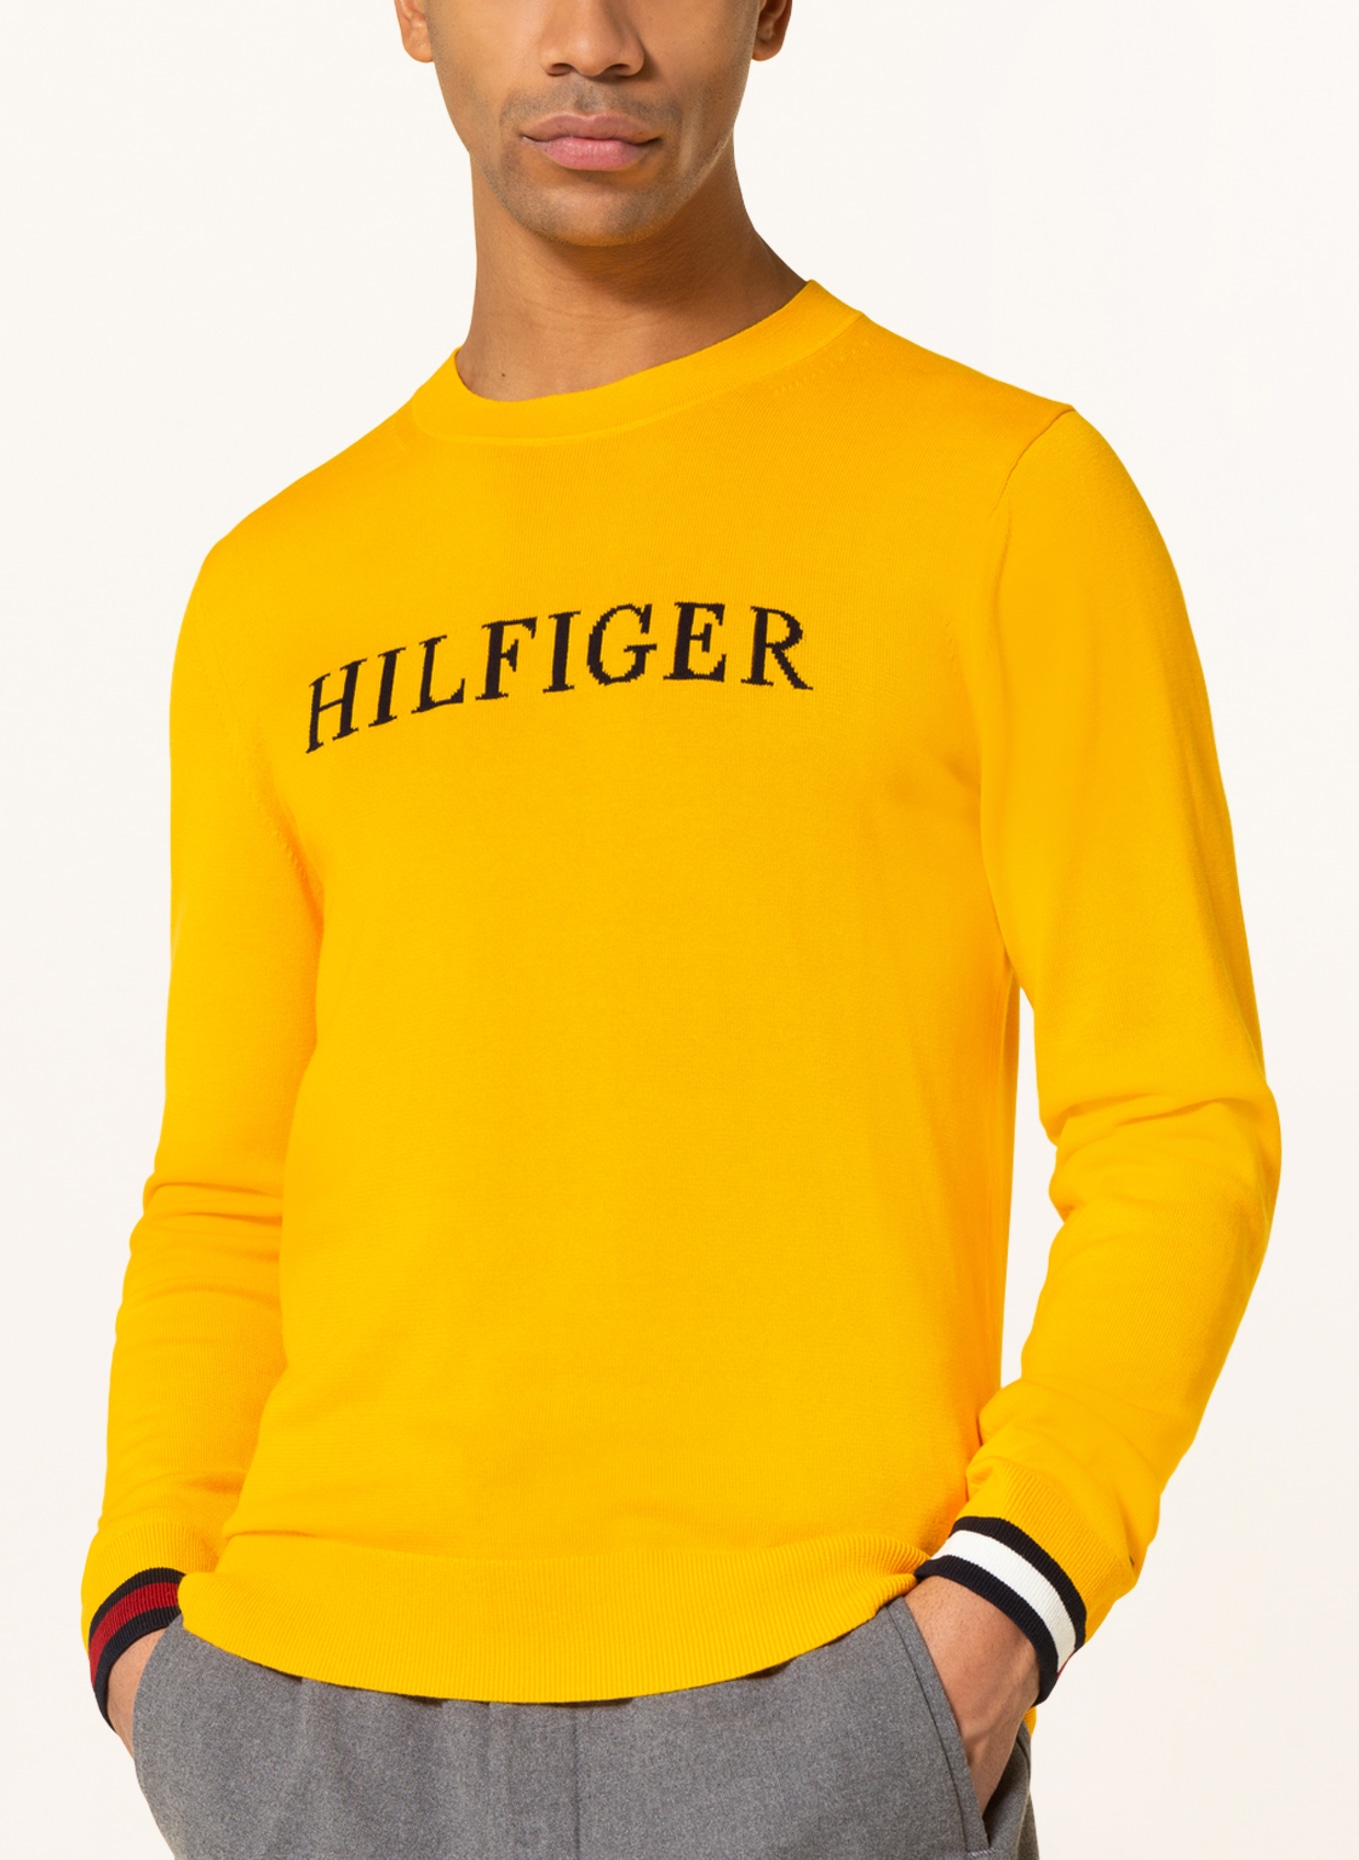 TOMMY HILFIGER Pullover, Farbe: DUNKELGELB (Bild 4)